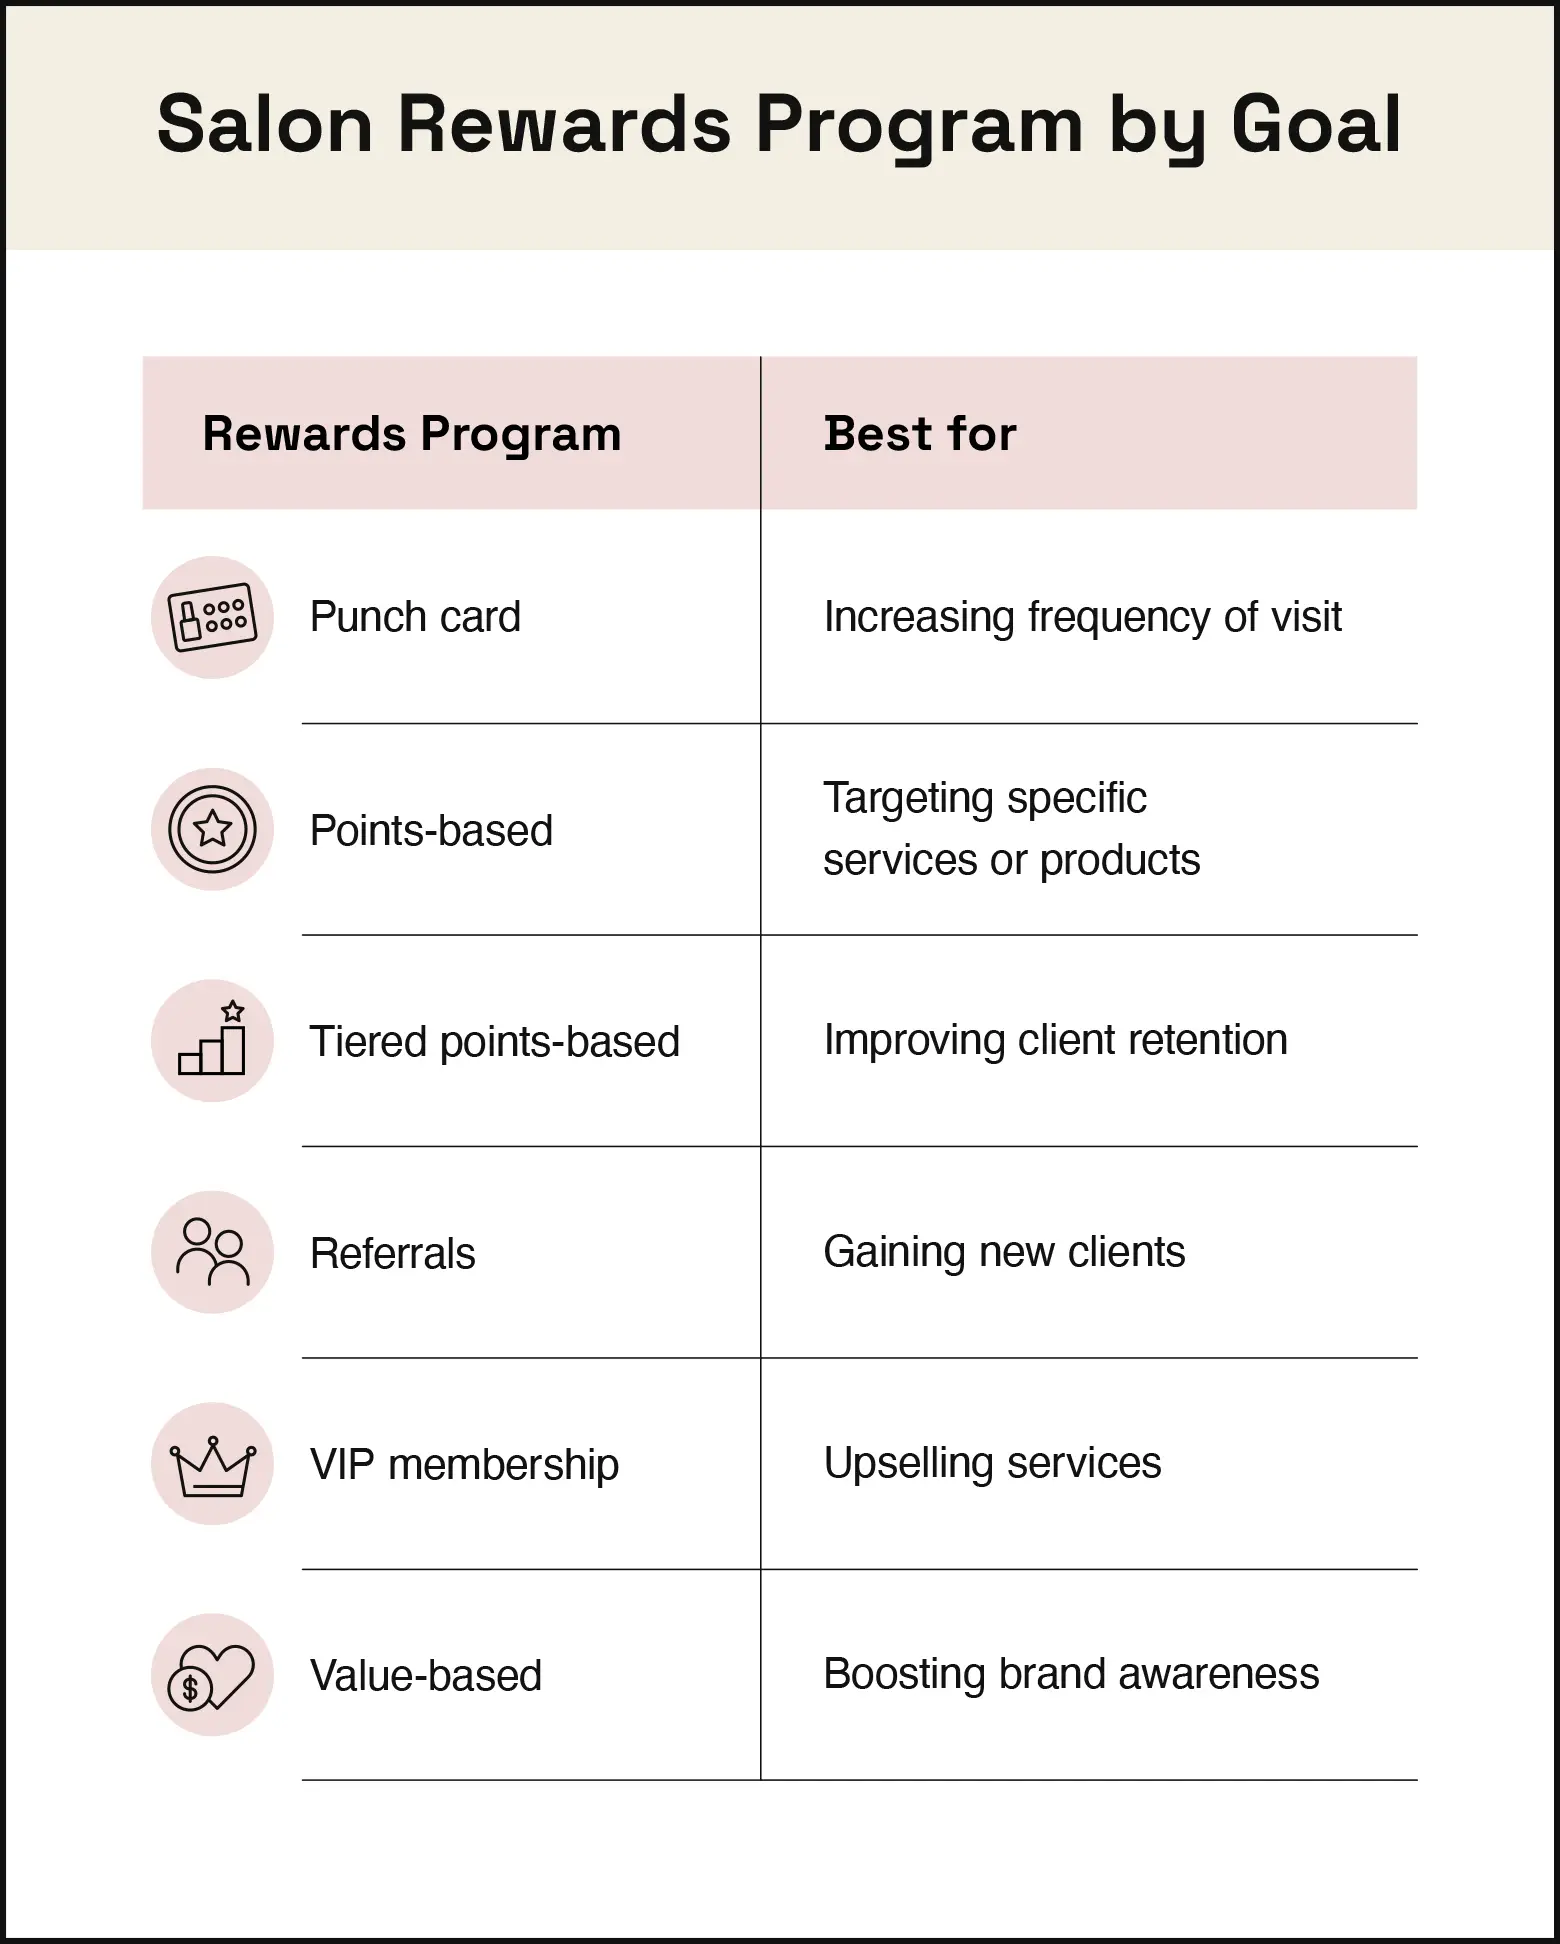 Chart depicts the best salon rewards program based on specific business goals.